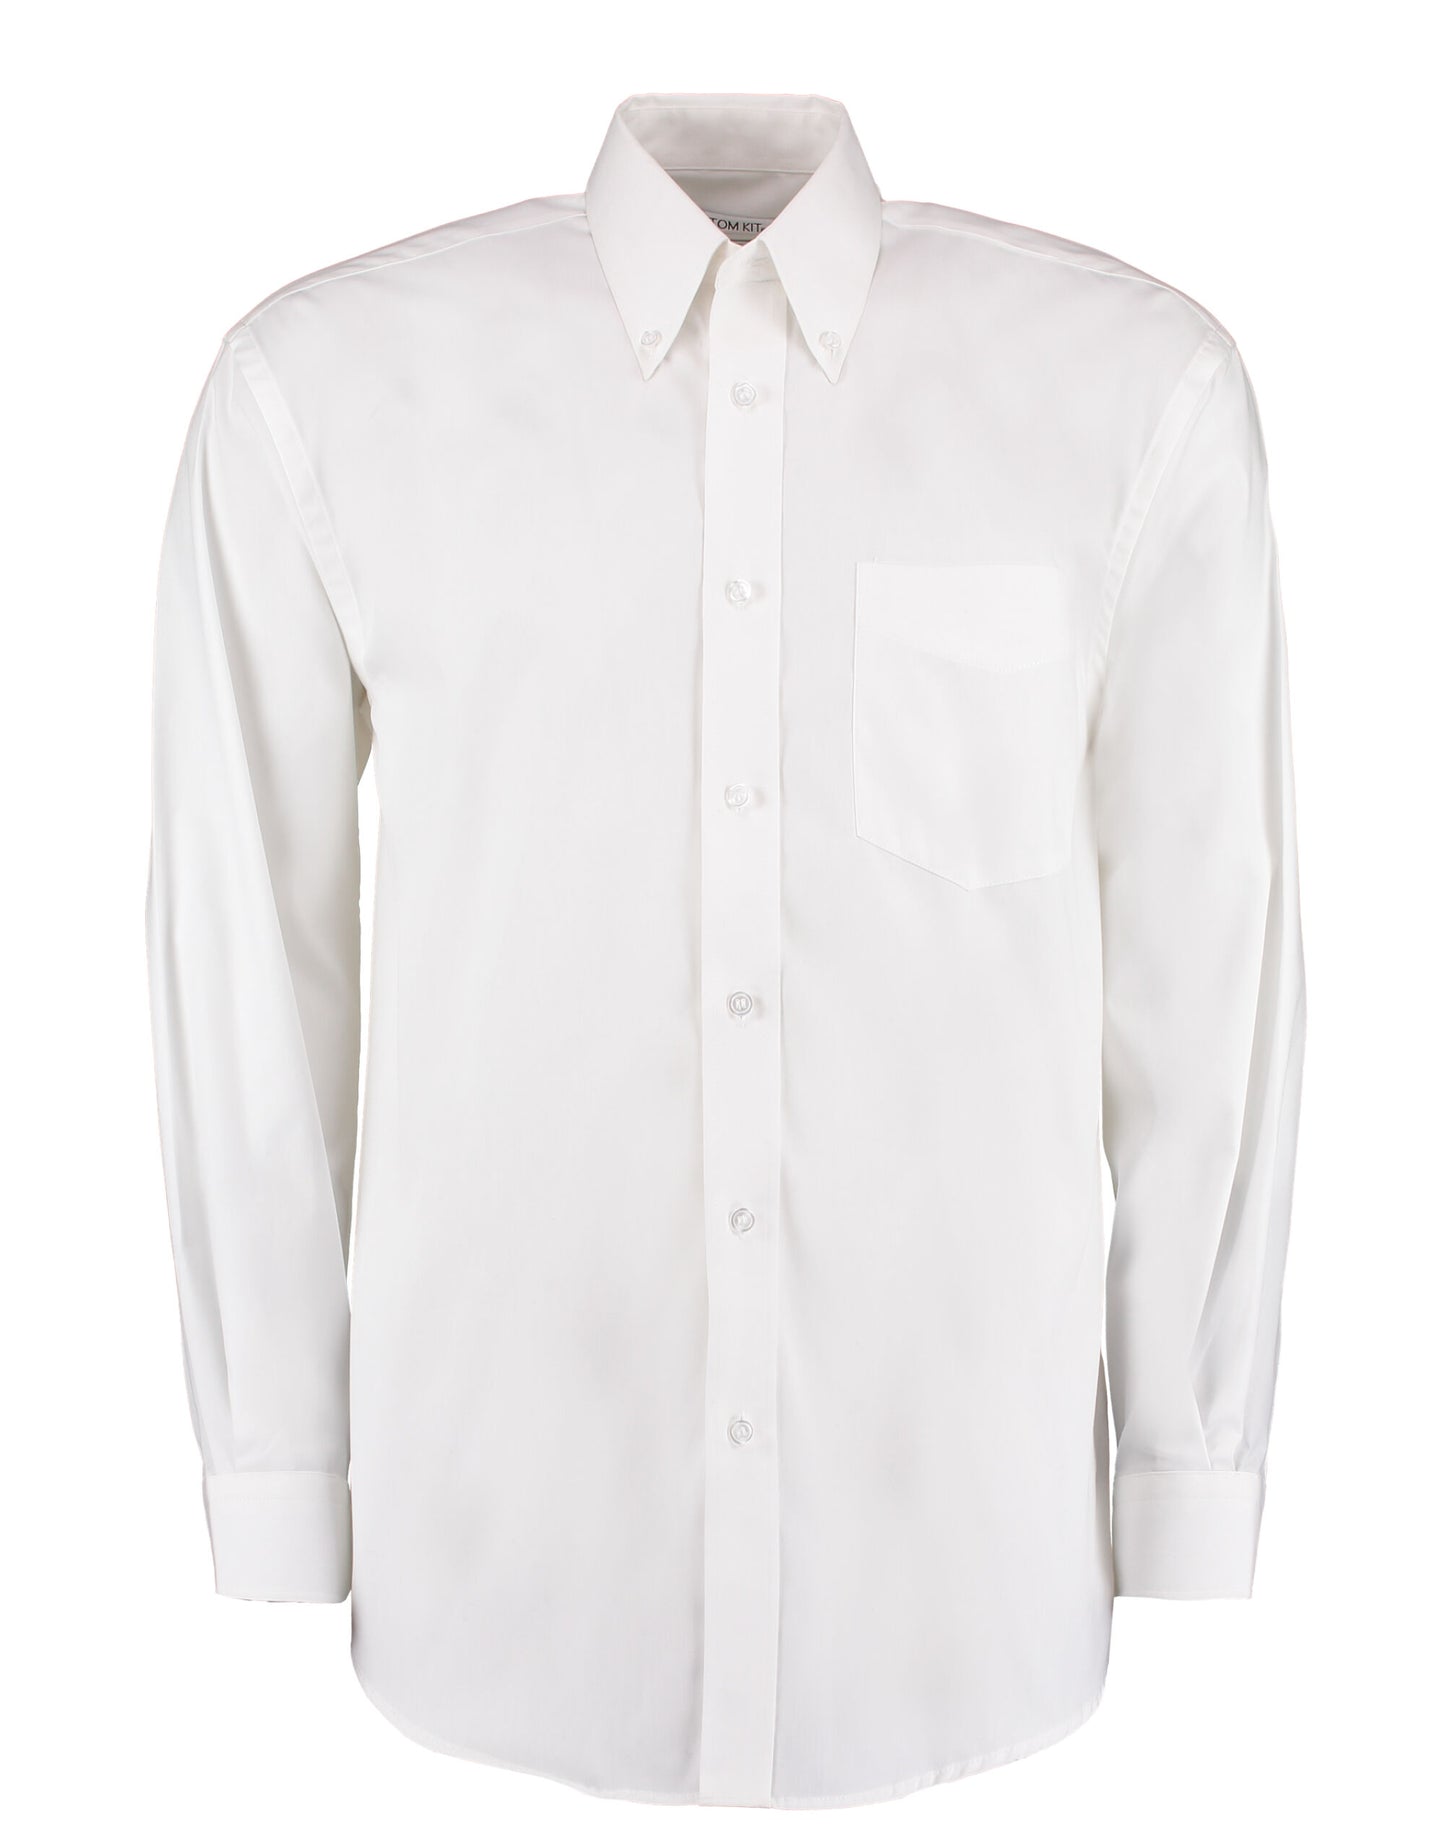 KK105 Kustom Kit Premium Oxford Shirt Long Sleeve